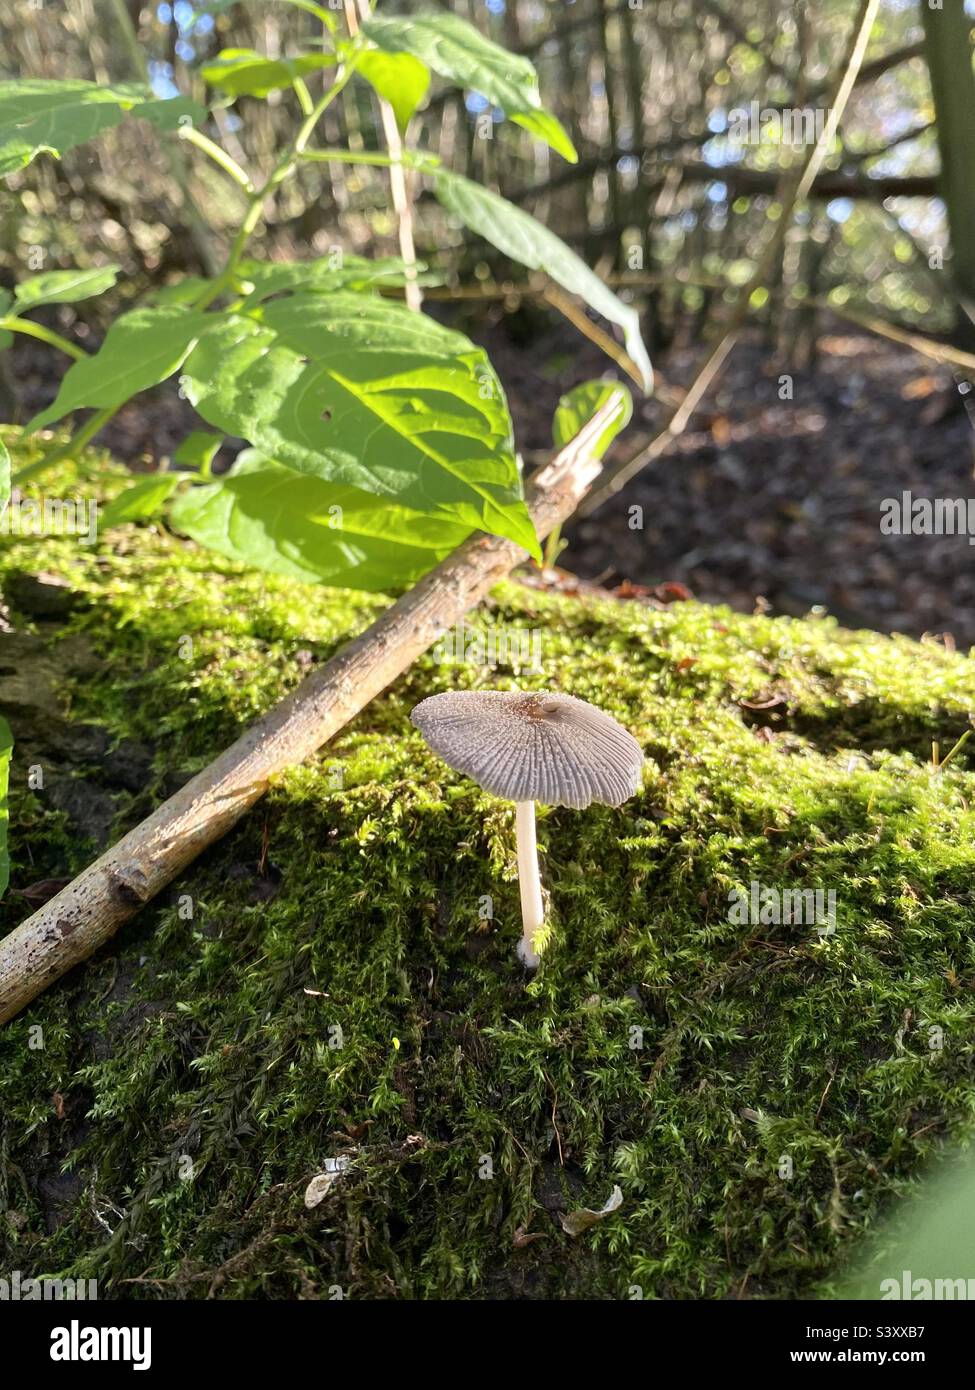 Wonderful Nature. Woodland forest walks to photograph mushrooms and fungi. Stock Photo